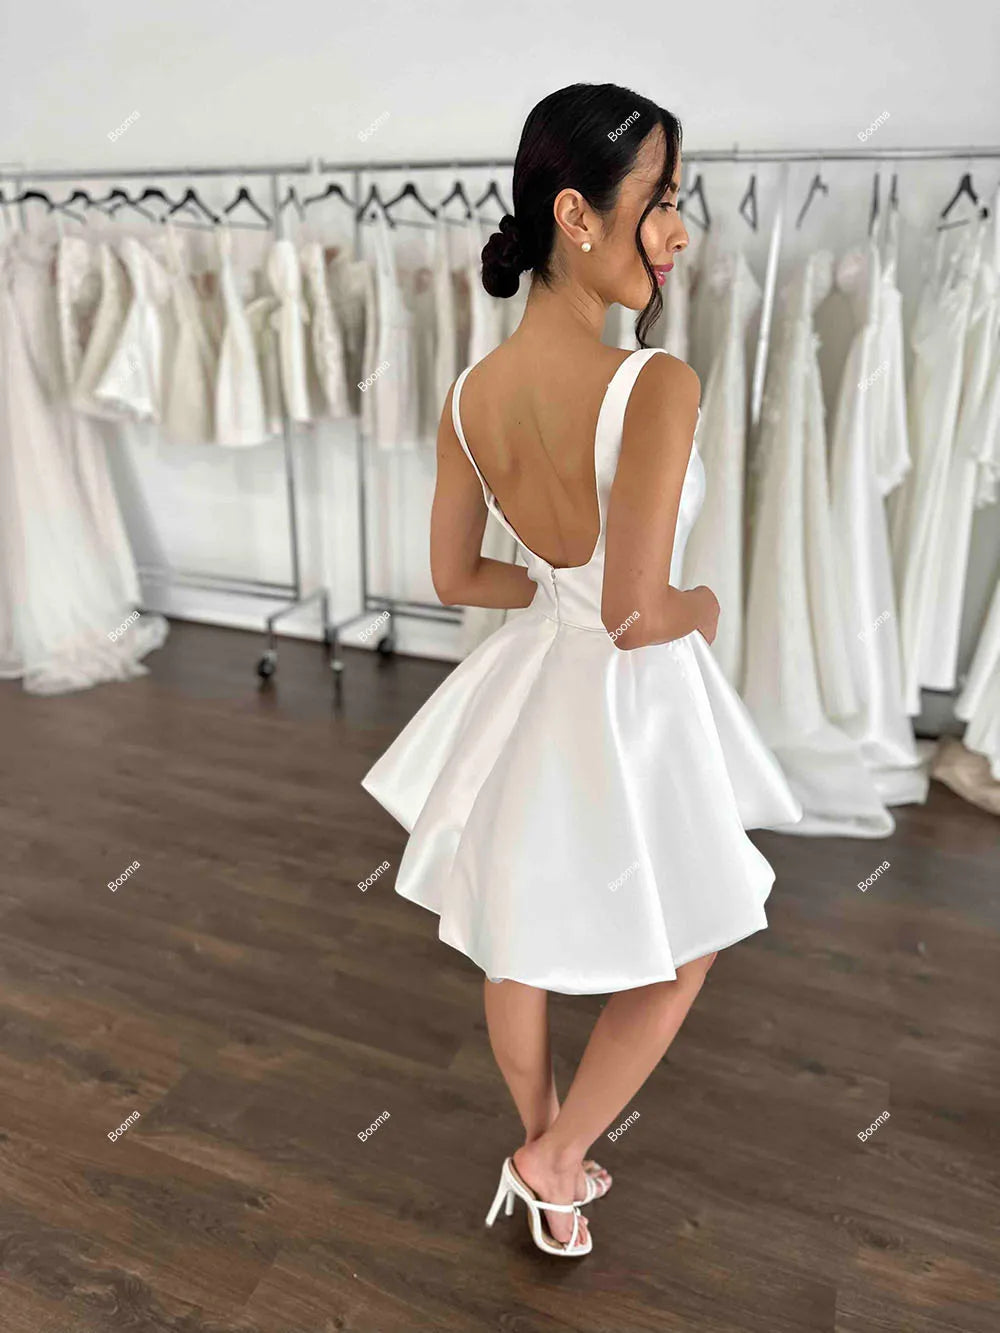 LINE LINE שמלות מסיבות חתונה קצרות צווארון מרובע שרוולים ללא שרוולים שמלות כלות כלות לנשים מעל שמלת נשף ברך